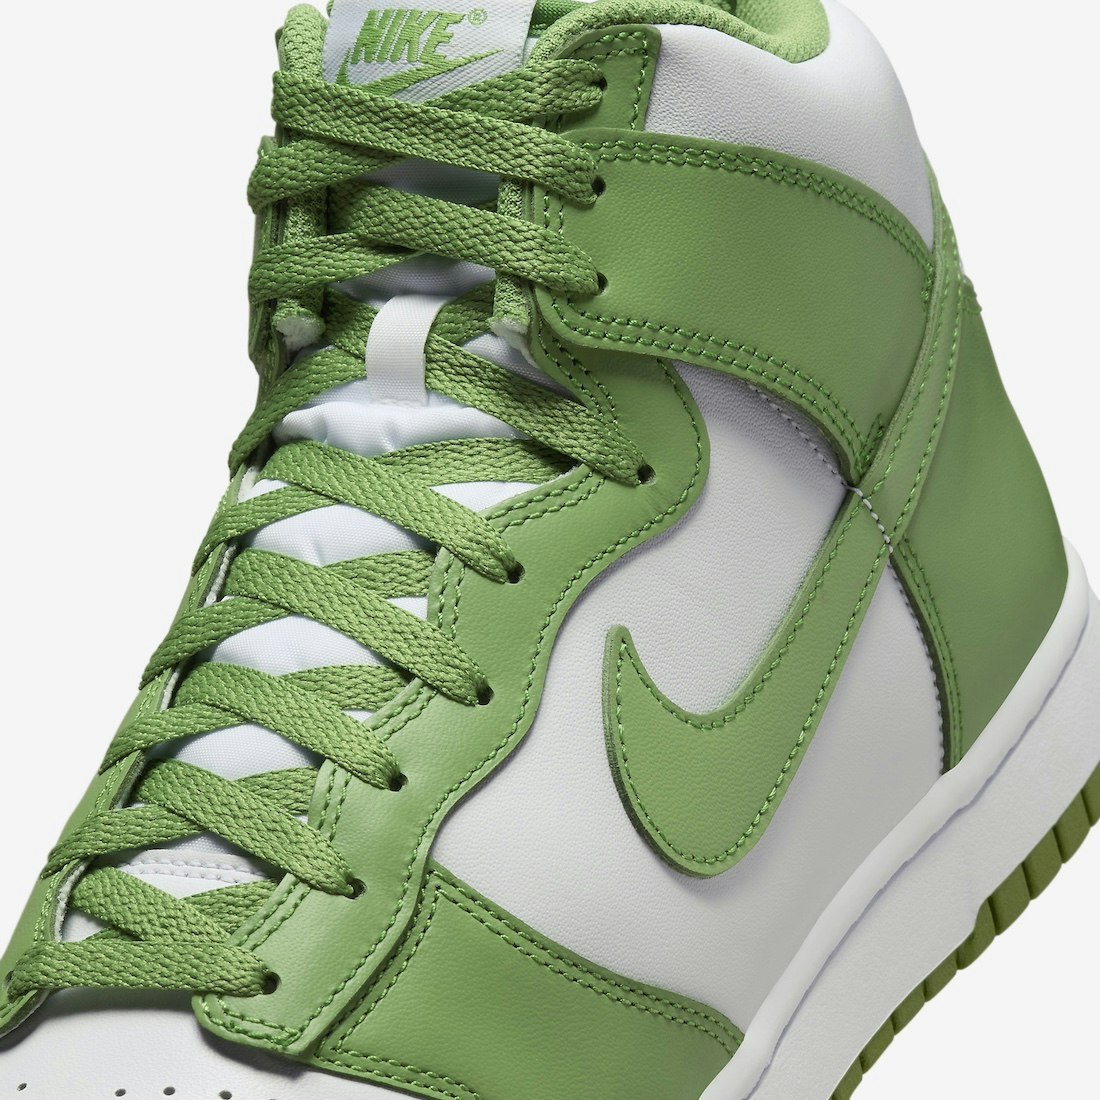 Nike Dunk High "Chlorophyll"